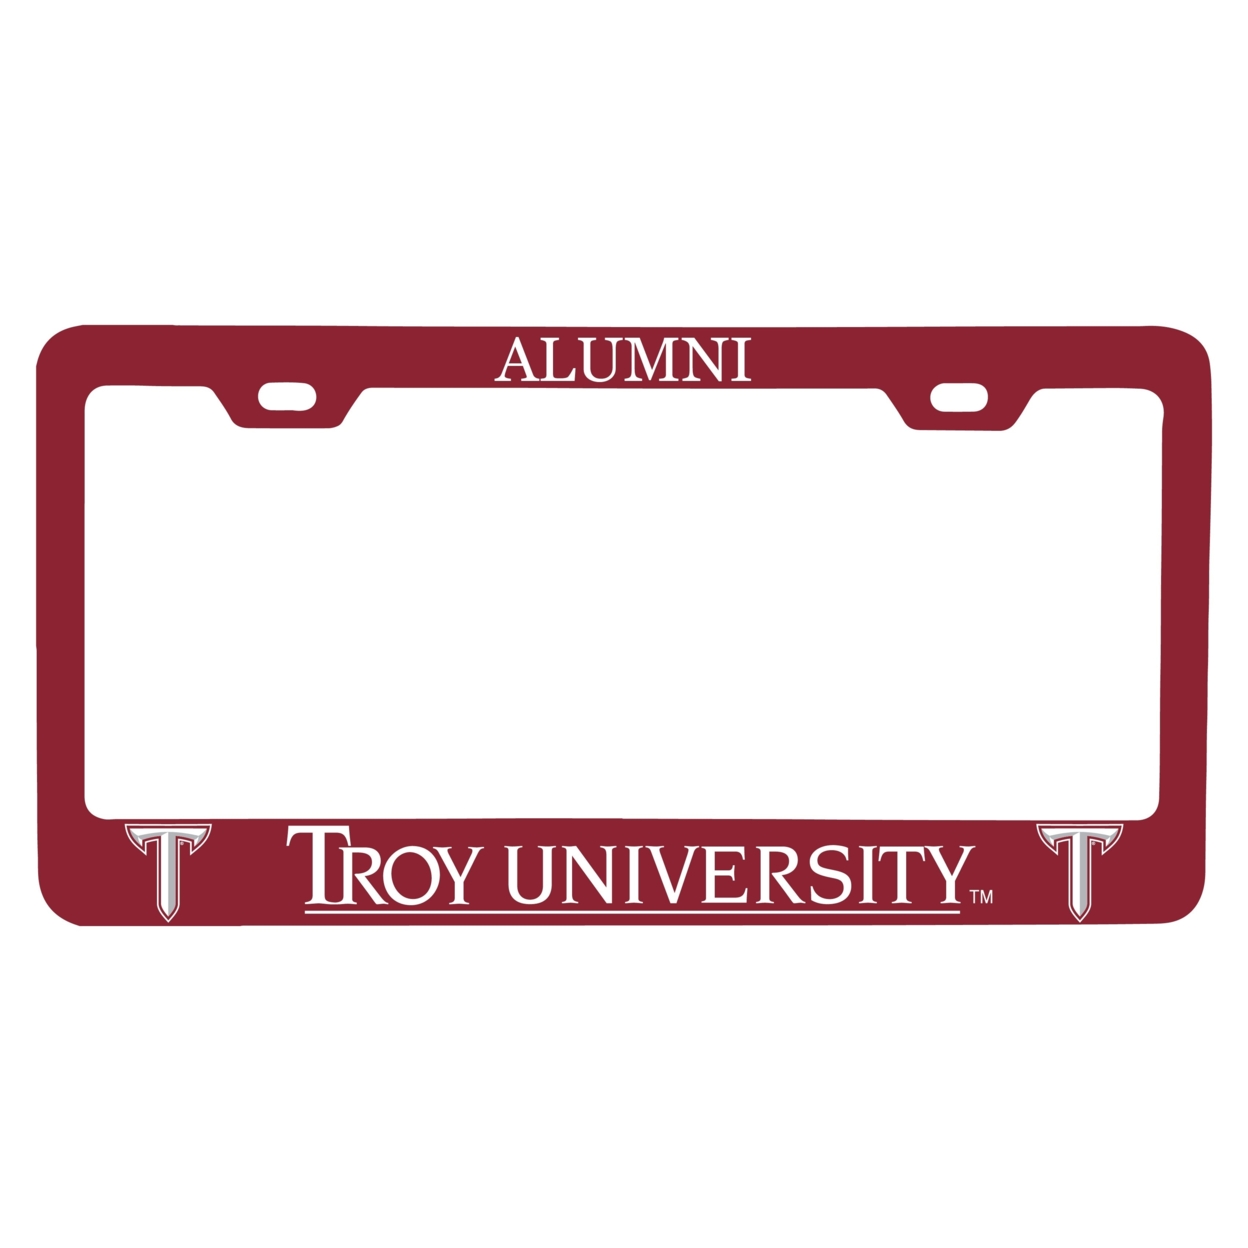 Troy University Alumni License Plate Frame